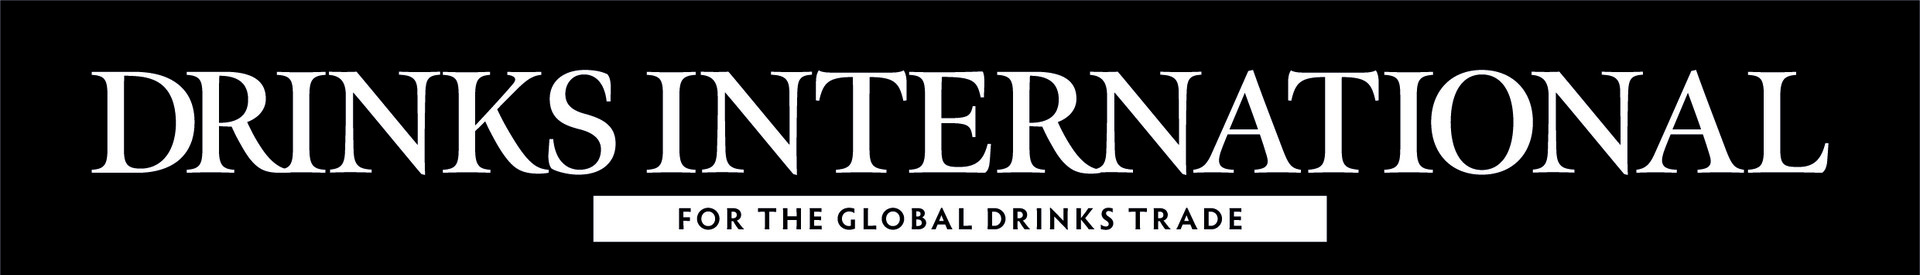 Drink International Logo